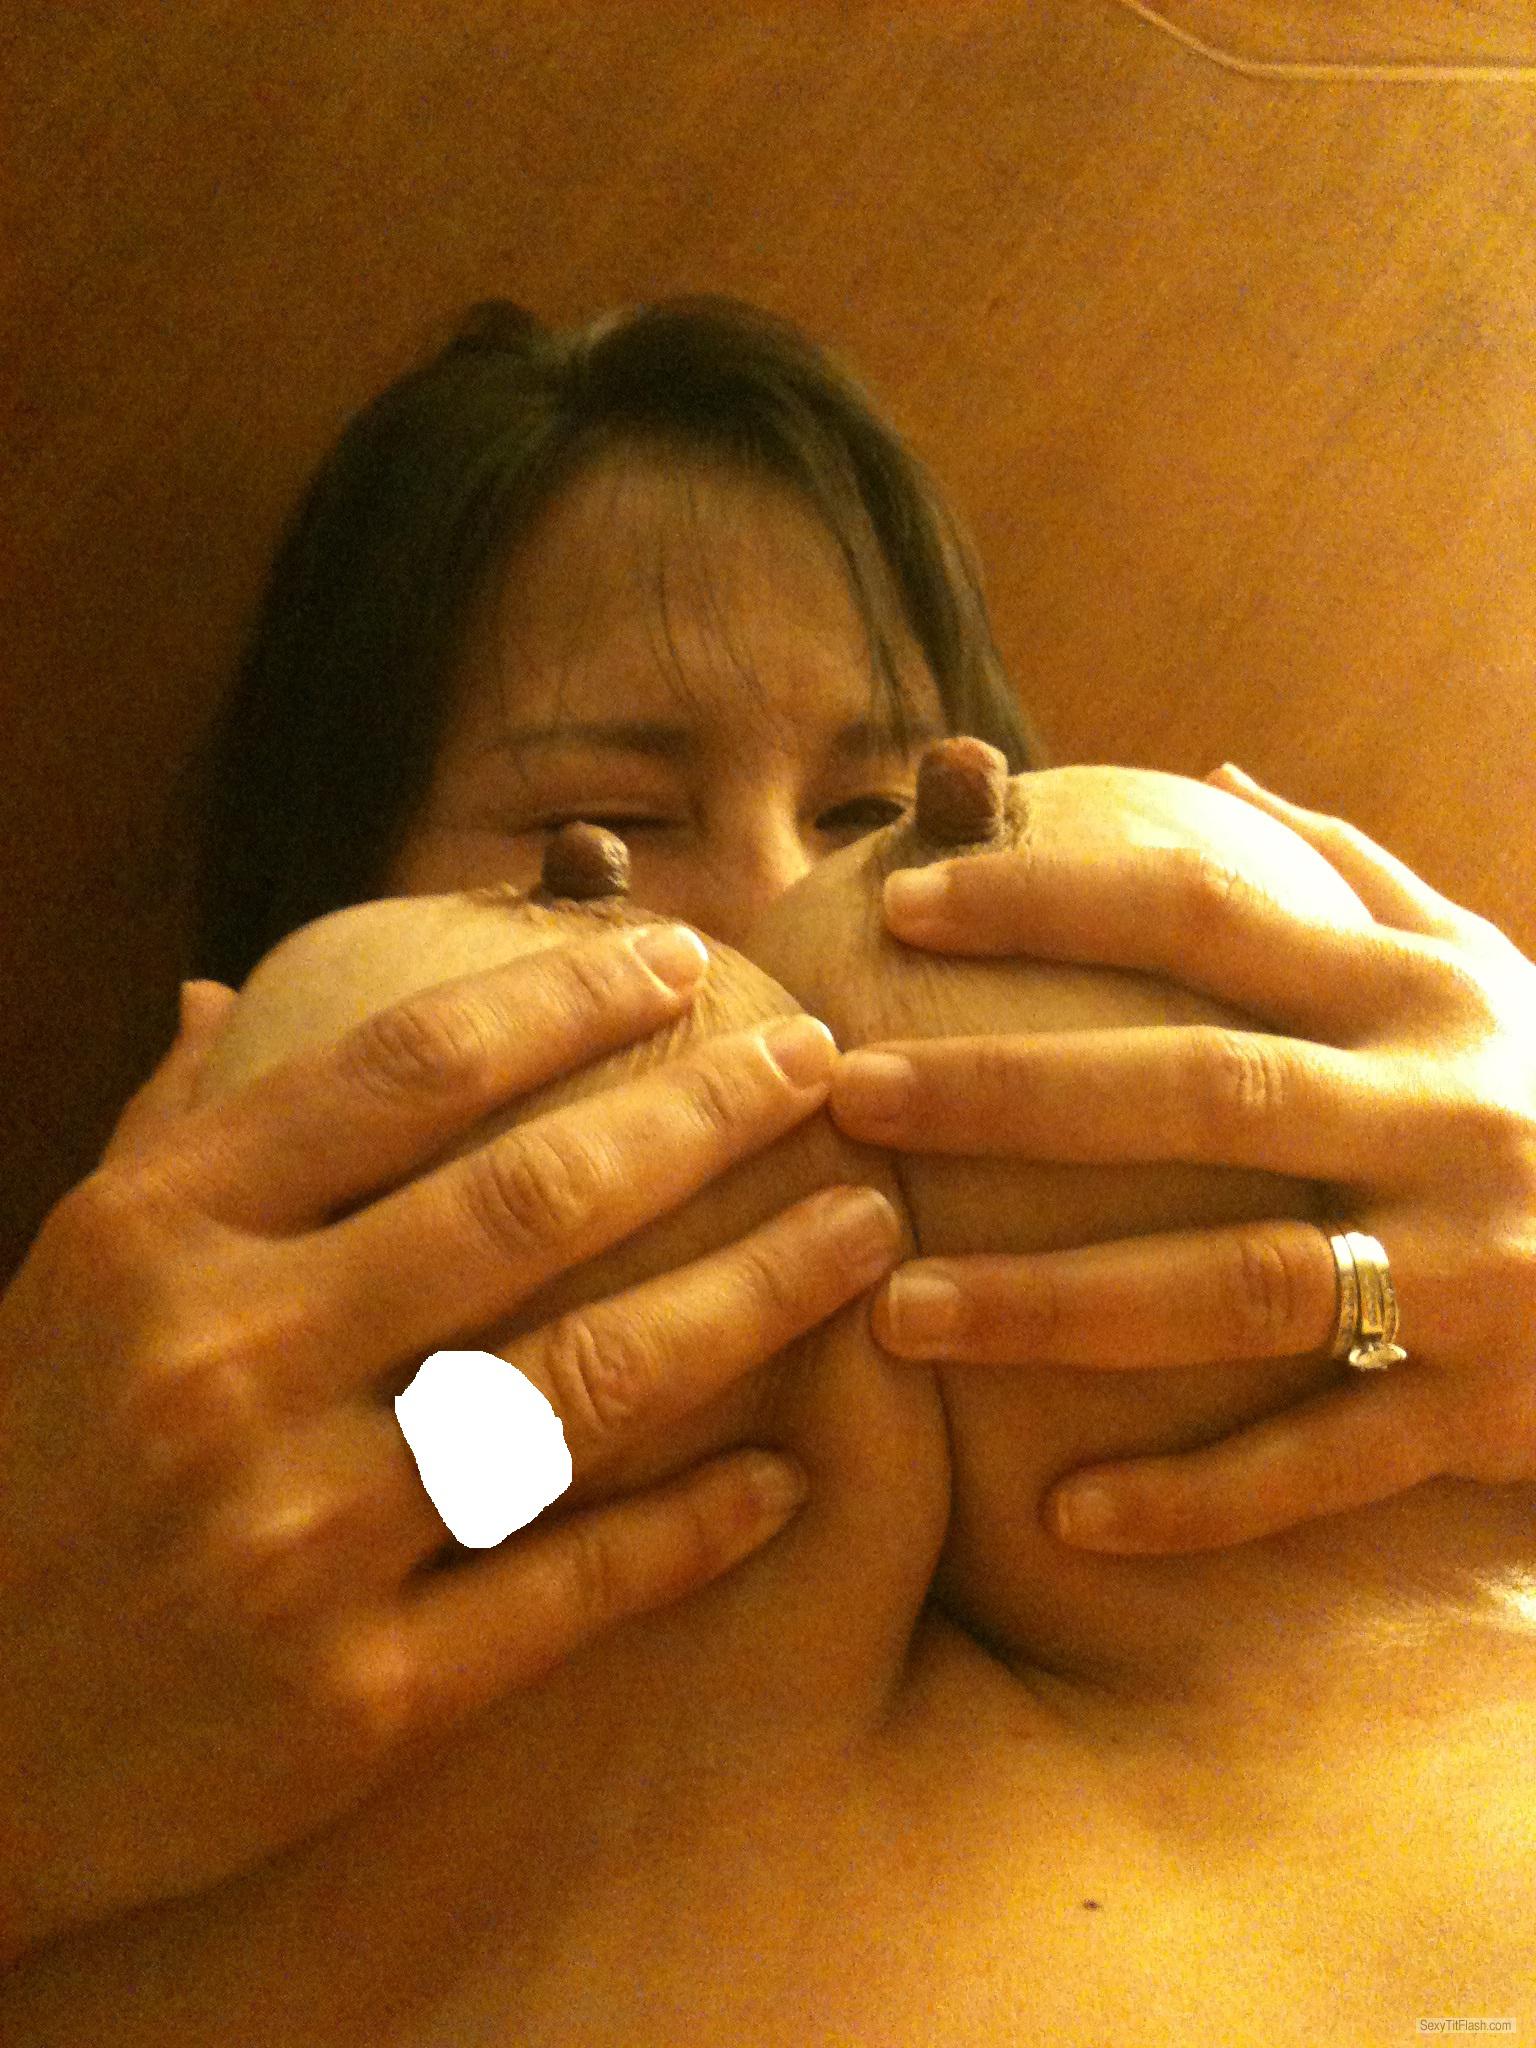 Tit Flash: Wife's Very Big Tits - Big Nips! from United States